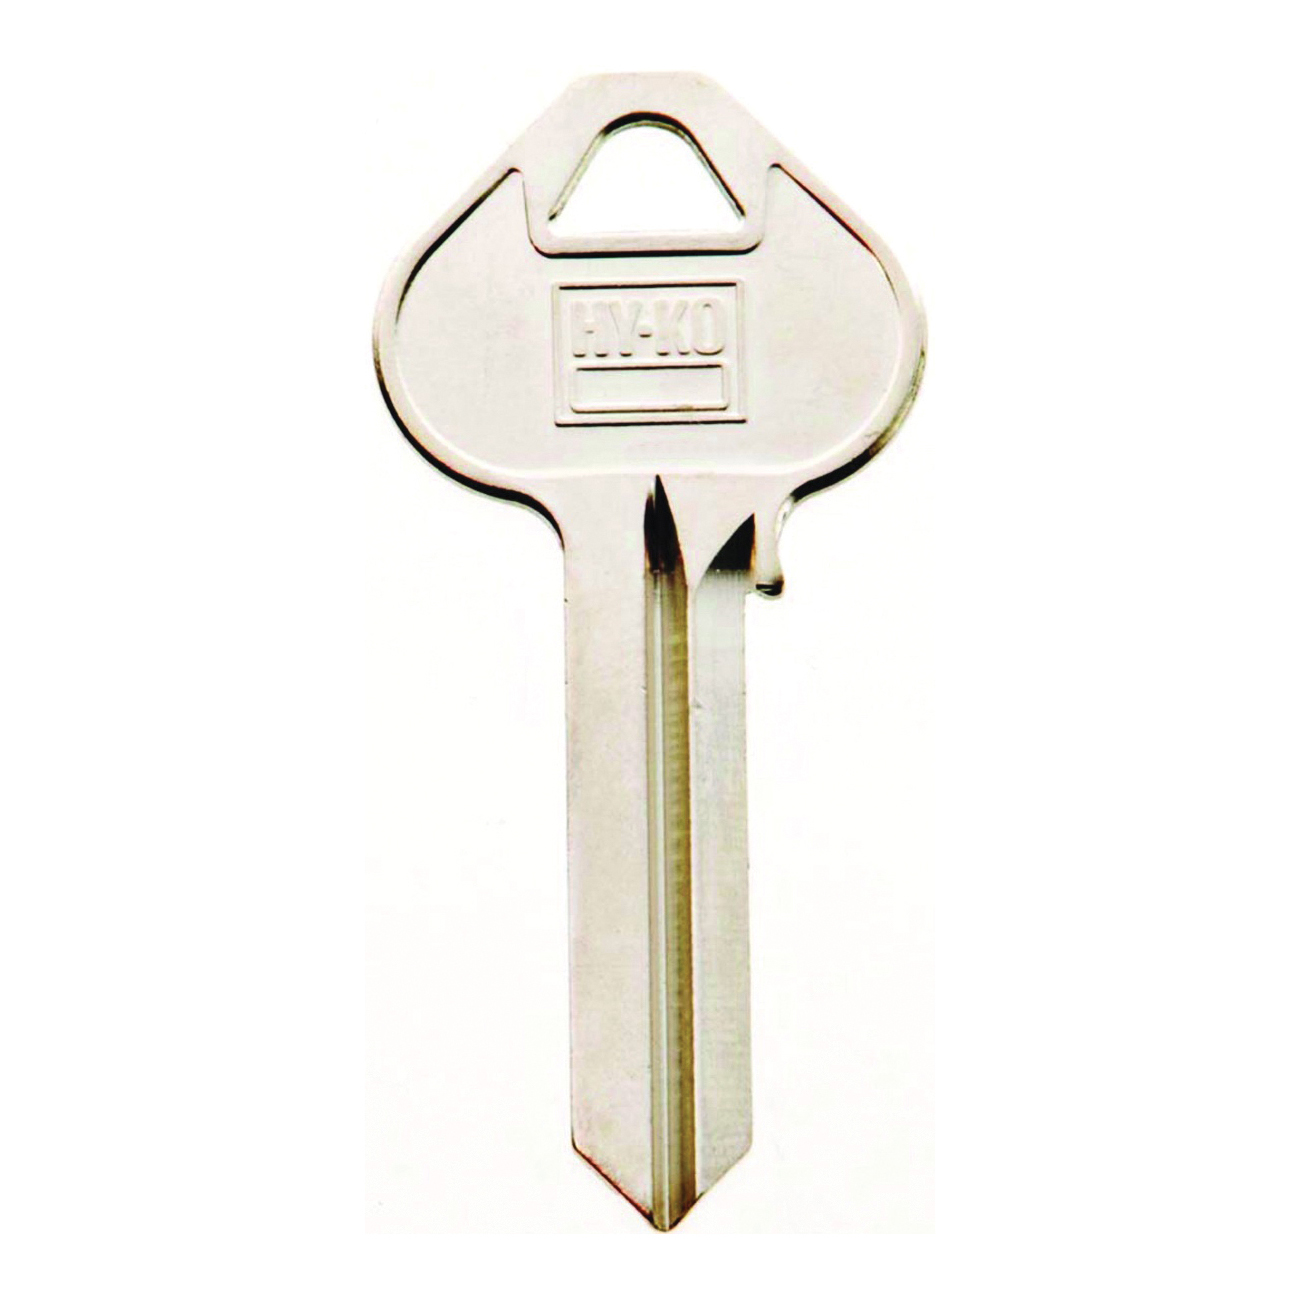 HY-KO 11010RU46 Key Blank, Brass, Nickel, For: Russwin and Corbin Cabinet, House Locks and Padlocks - 1